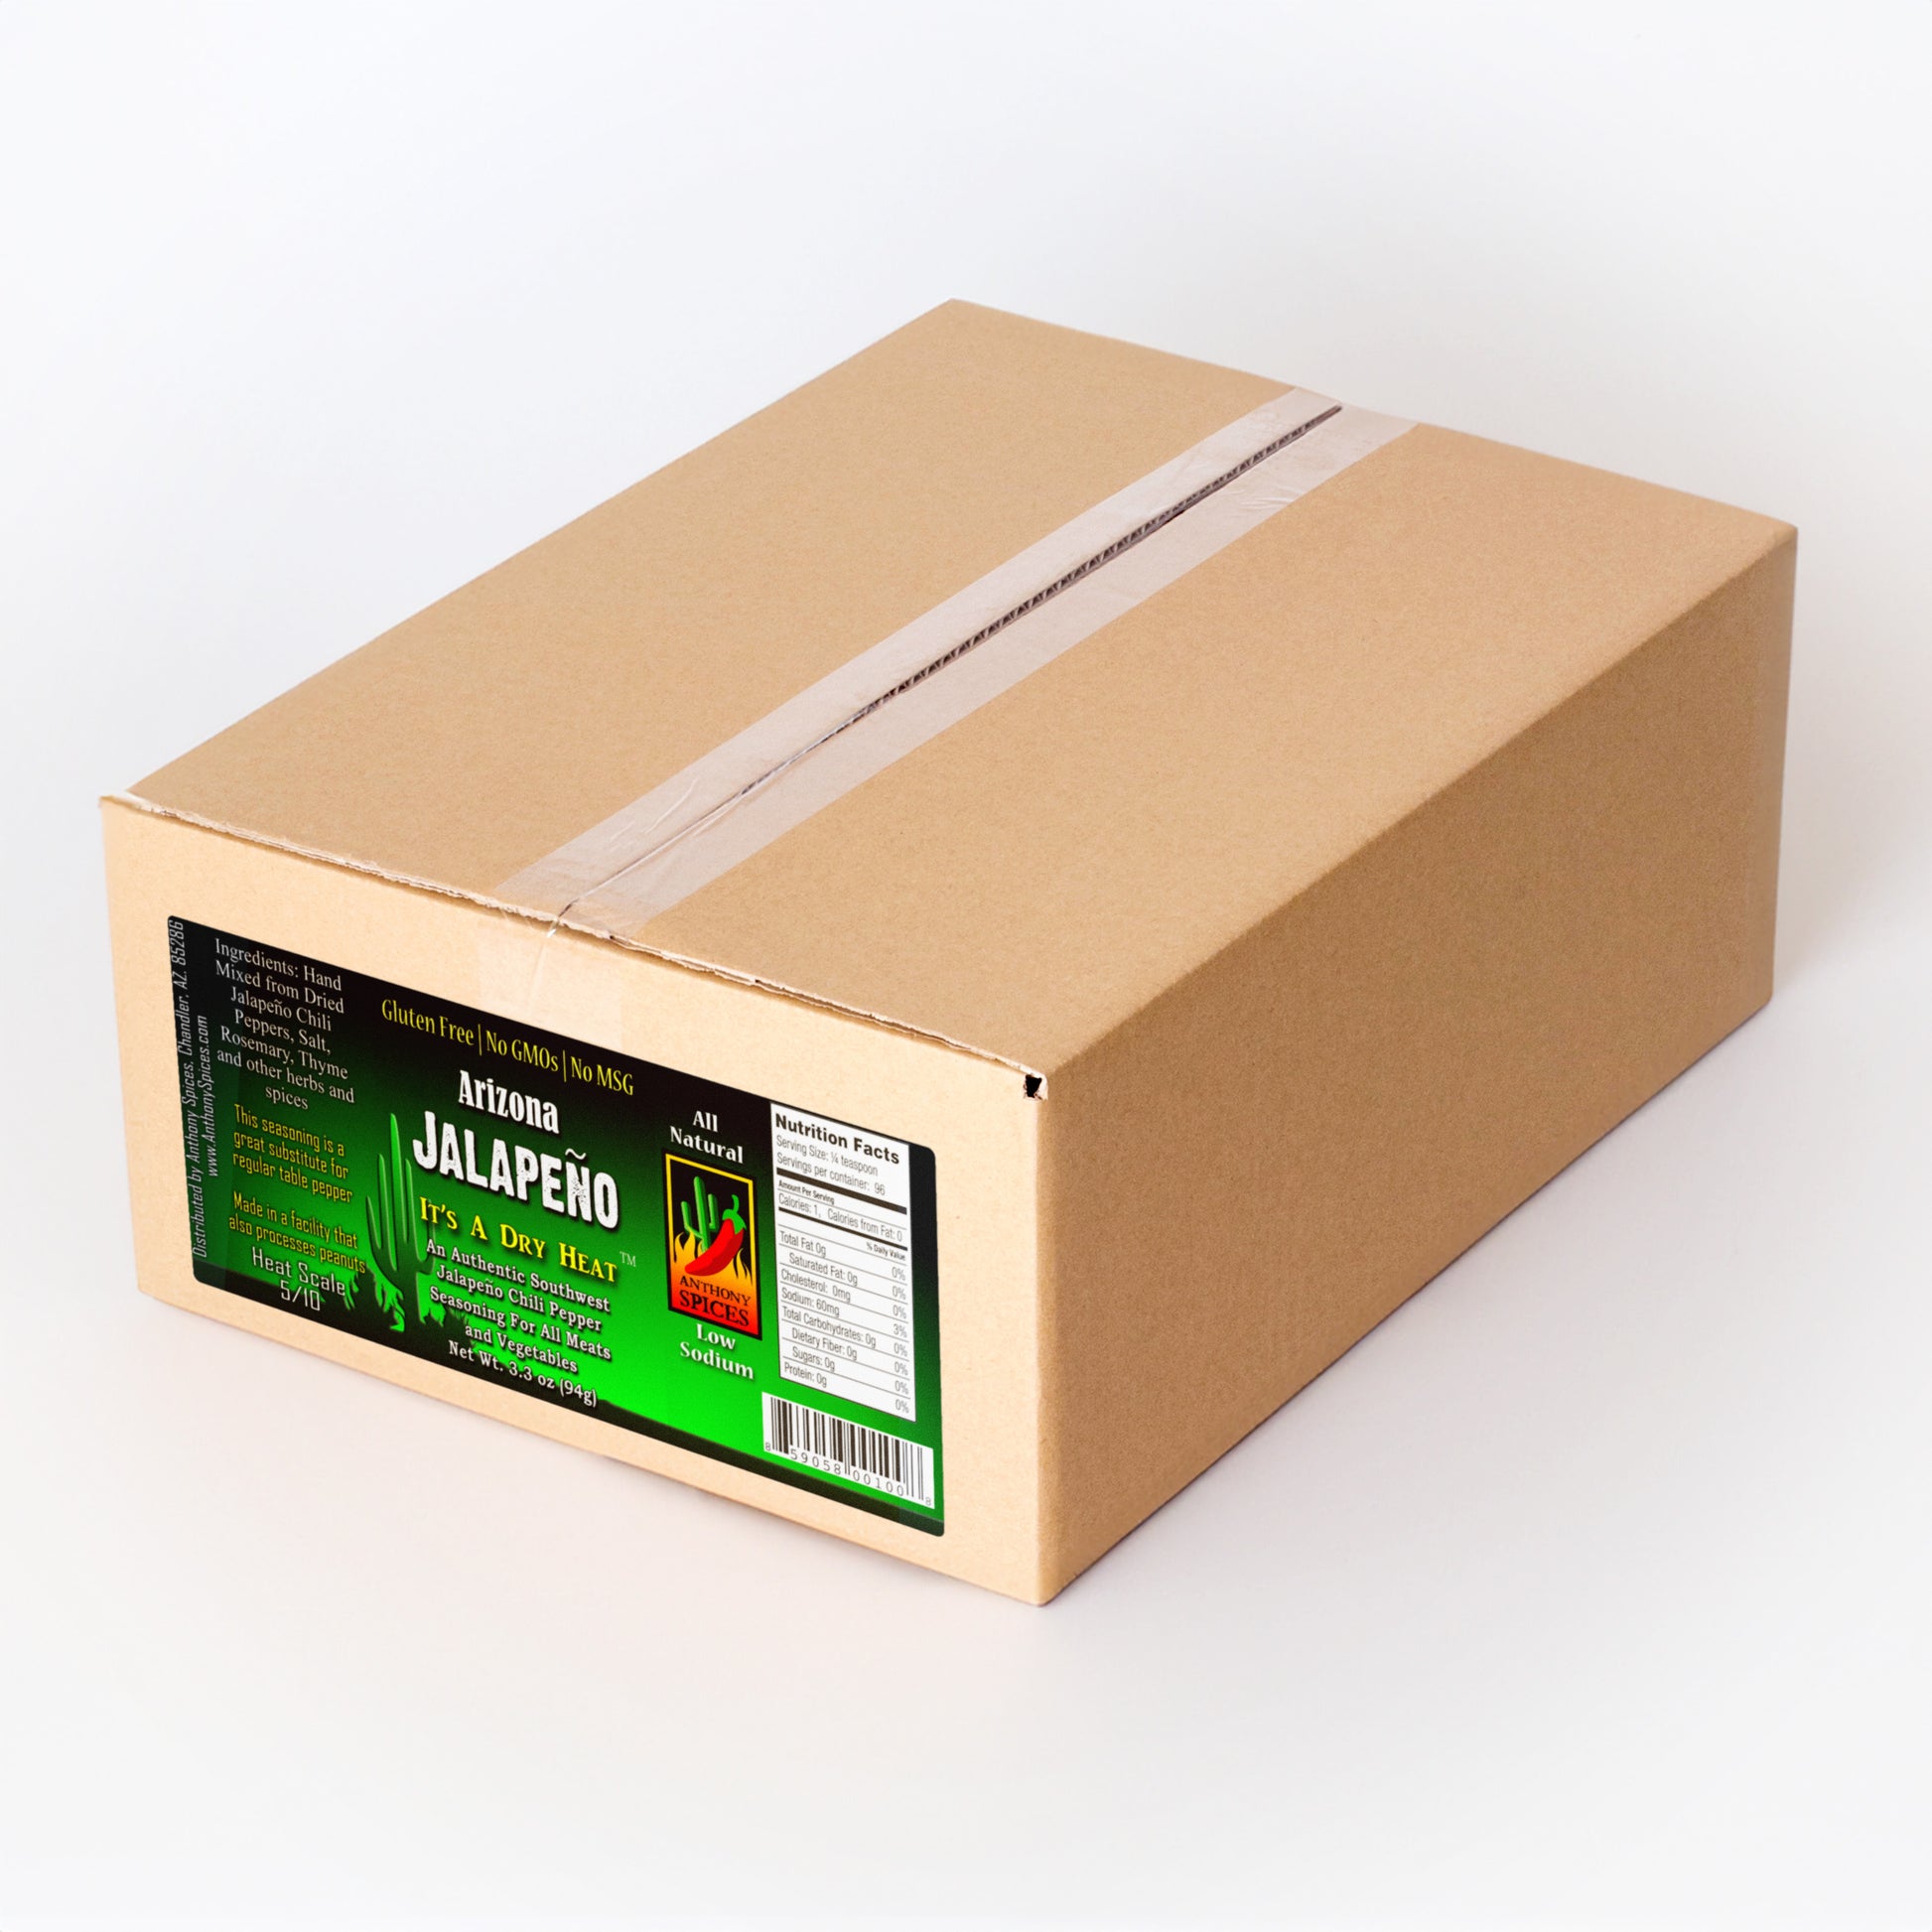 Case of 12 (3.3oz Bottles) of Arizona Jalapeno Spice - Closed shipping box with label